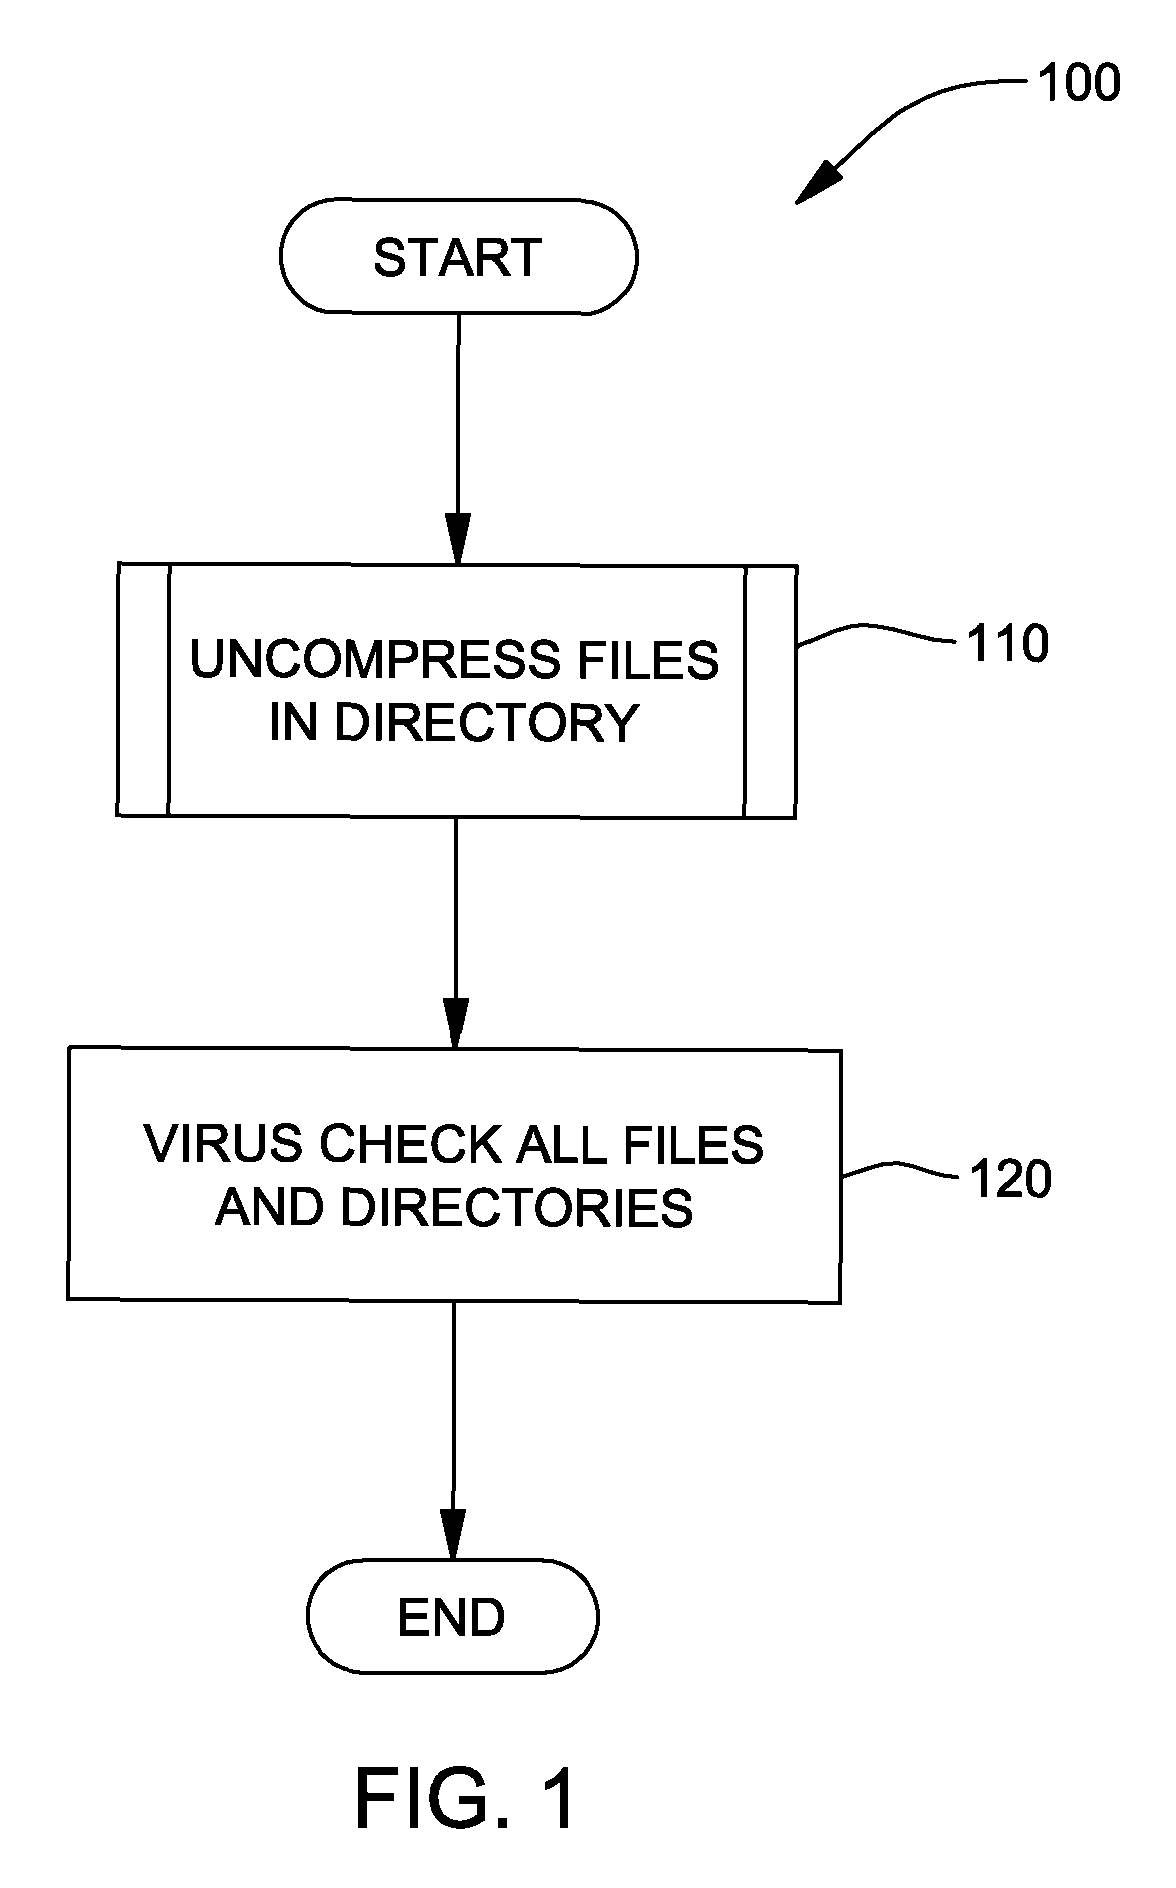 Method, system and program product for maximizing virus check coverage while minimizing redundancy in virus checking